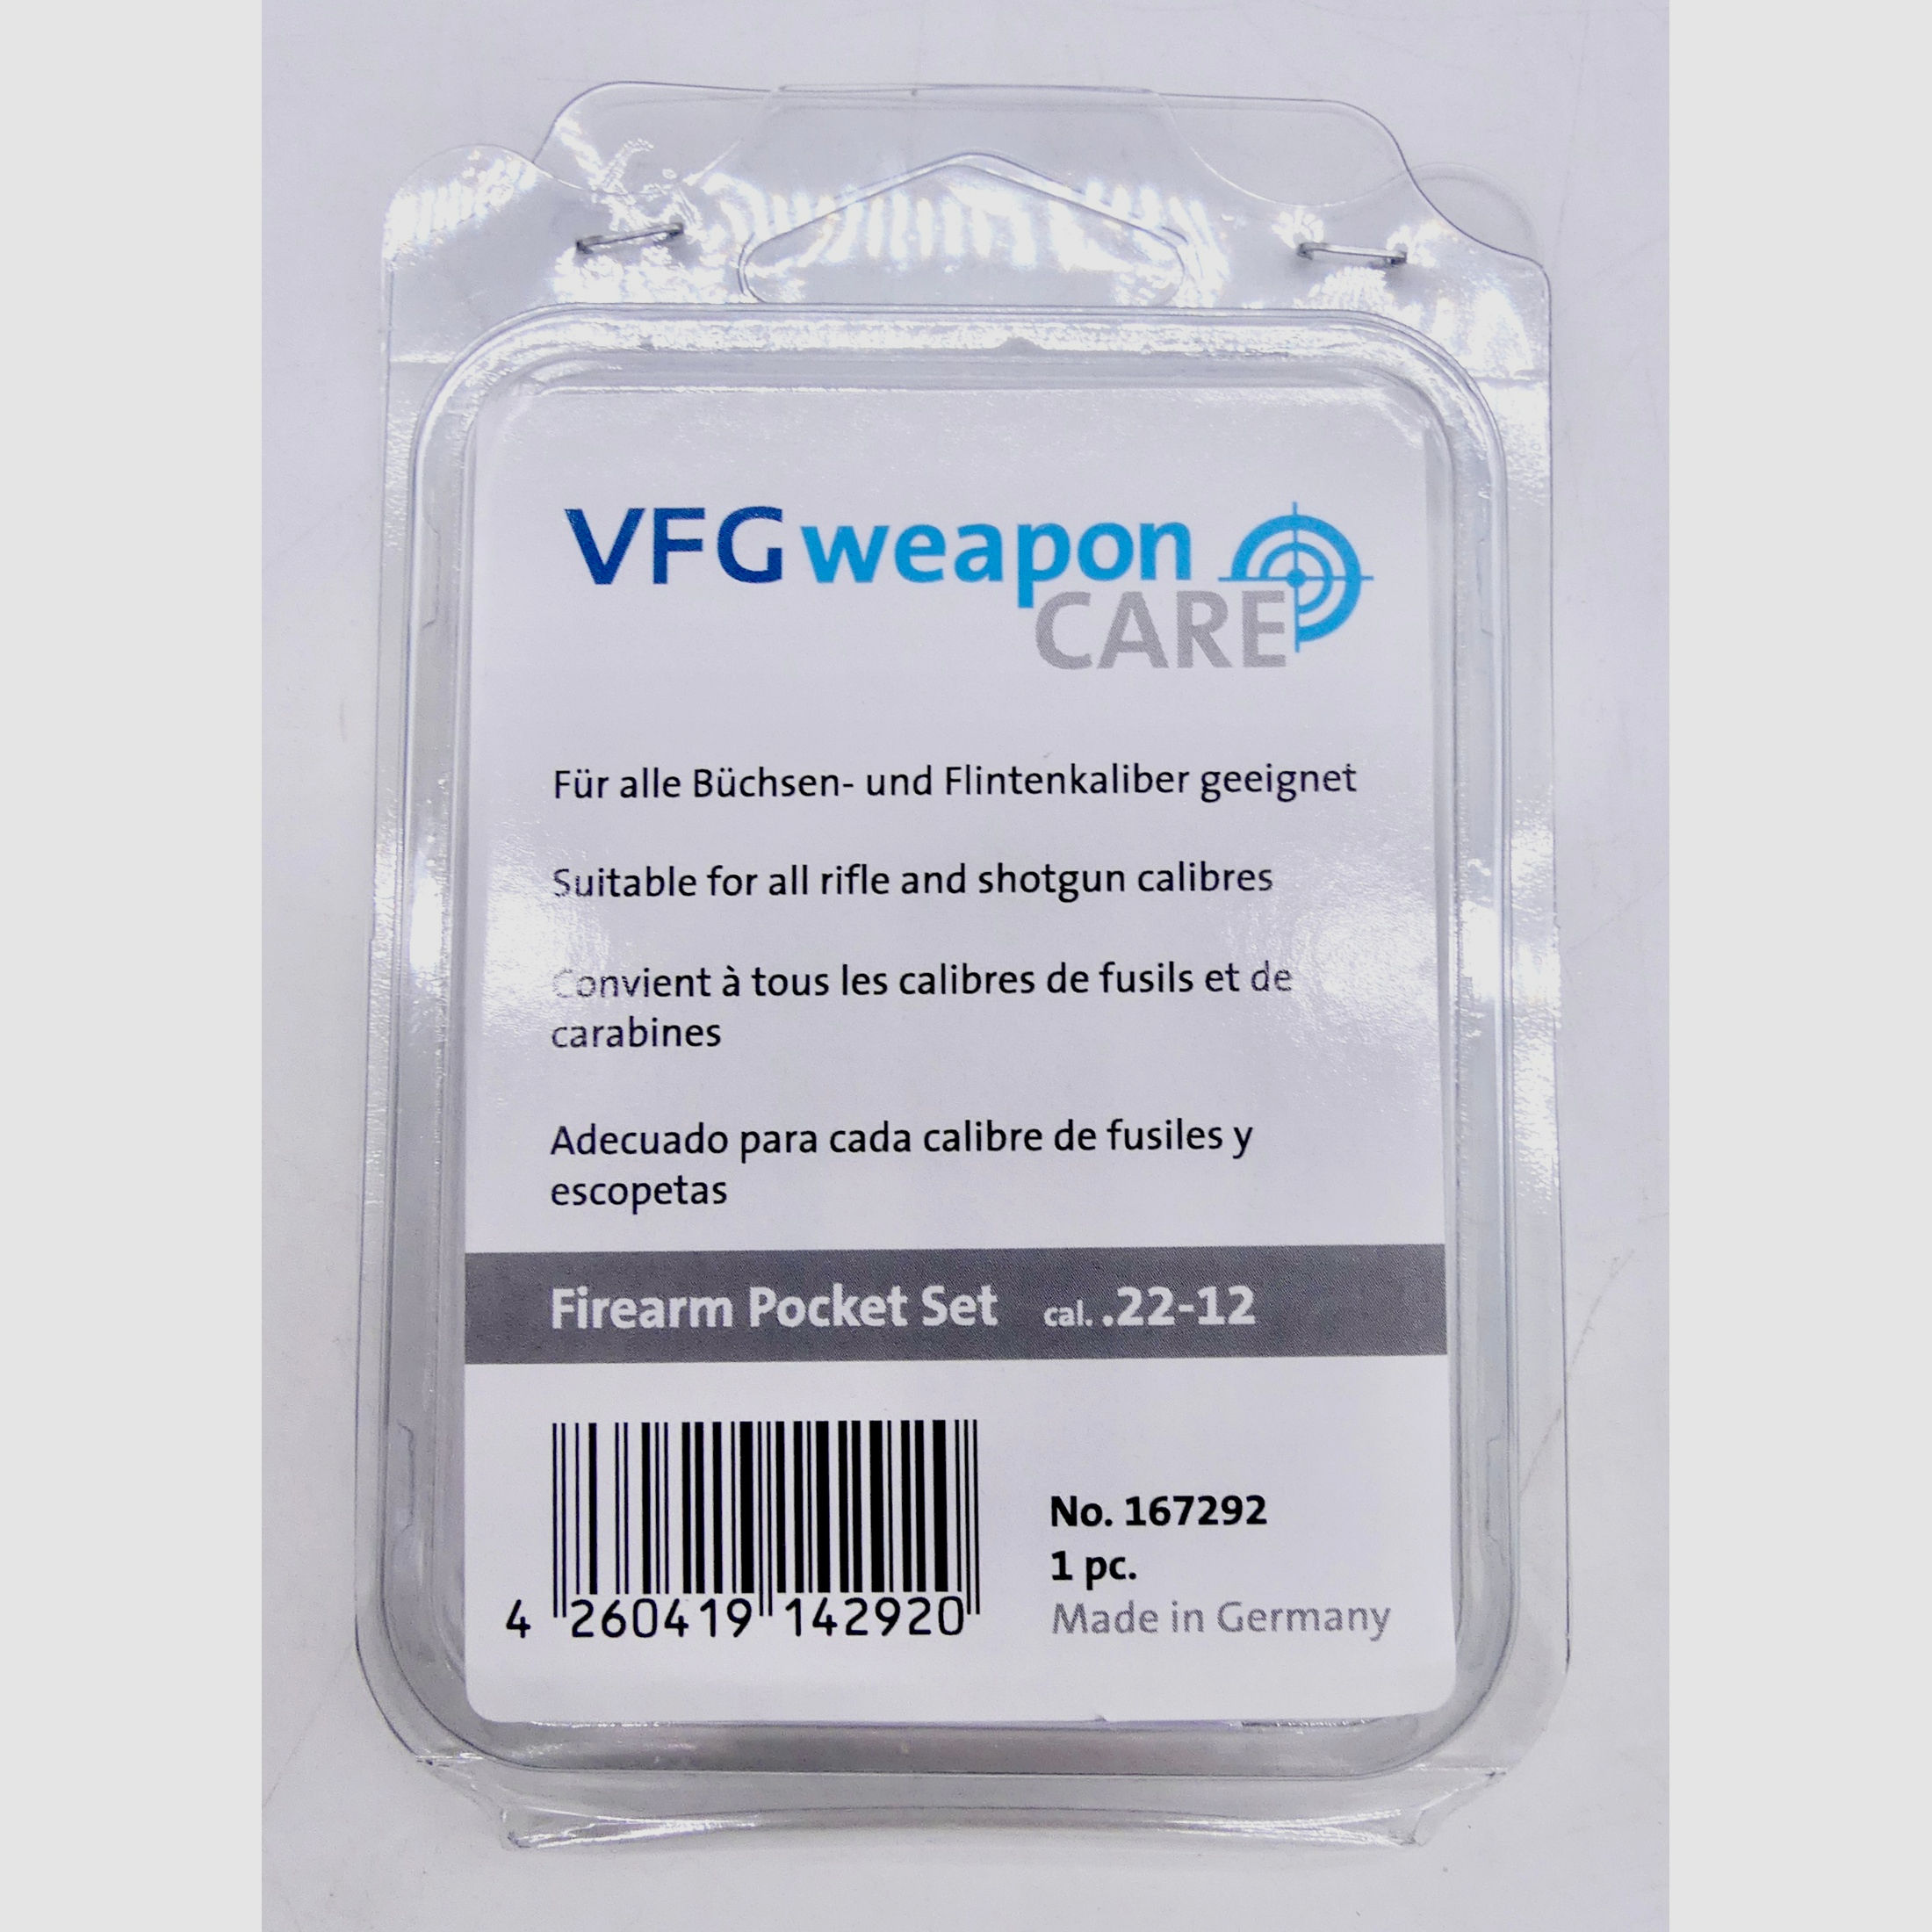 VFG 533 cal. 22-12 Waffenpflege Firearm Pocket Set inkl. Metalldose 1 Stück